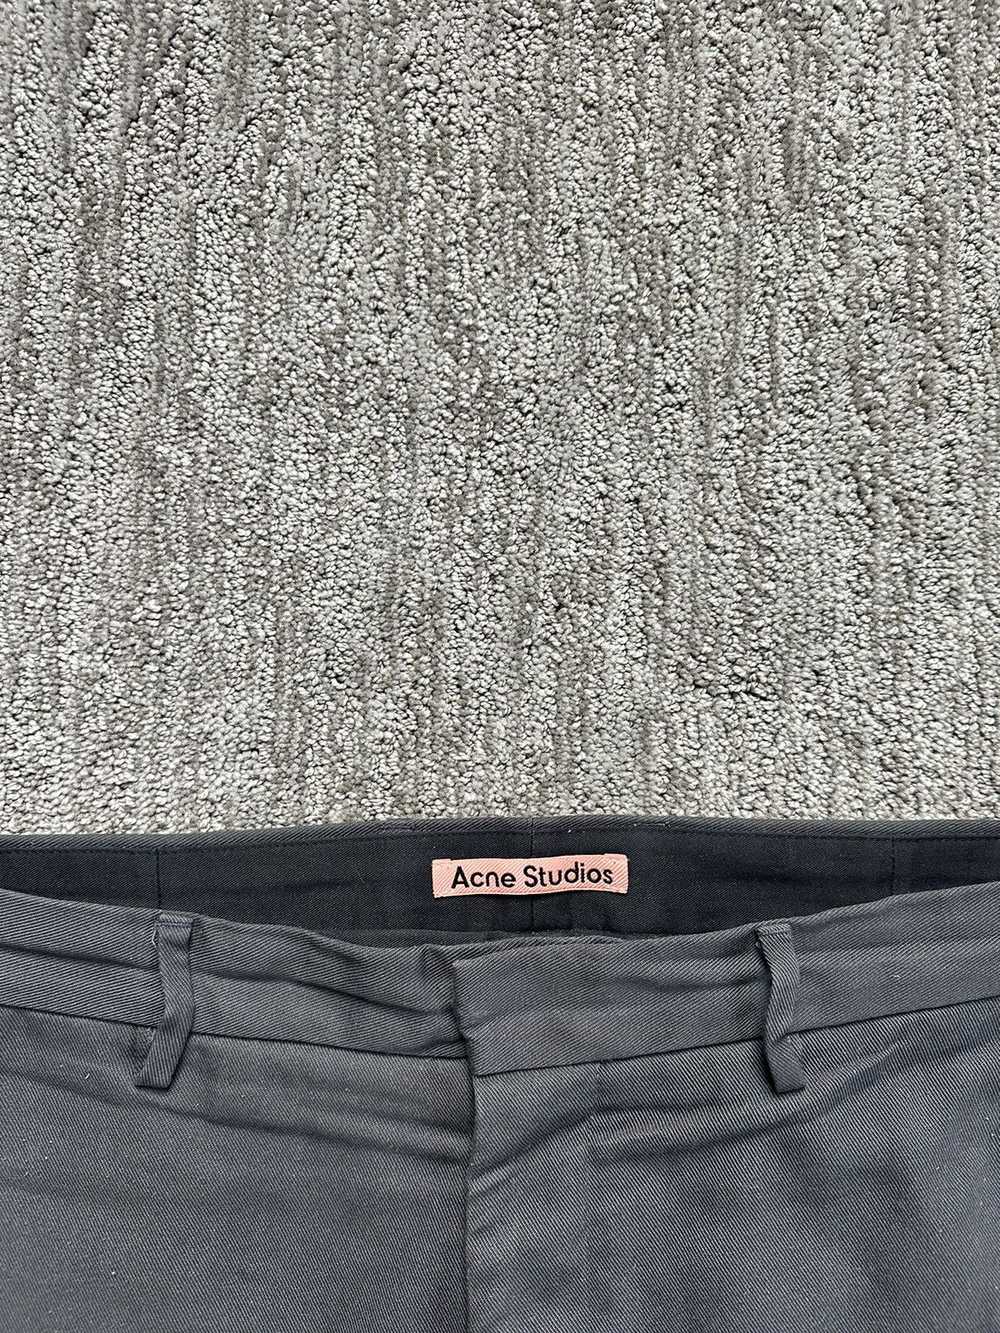 Acne Studios Acne Studios Grey Trouser Pant sz 52… - image 2